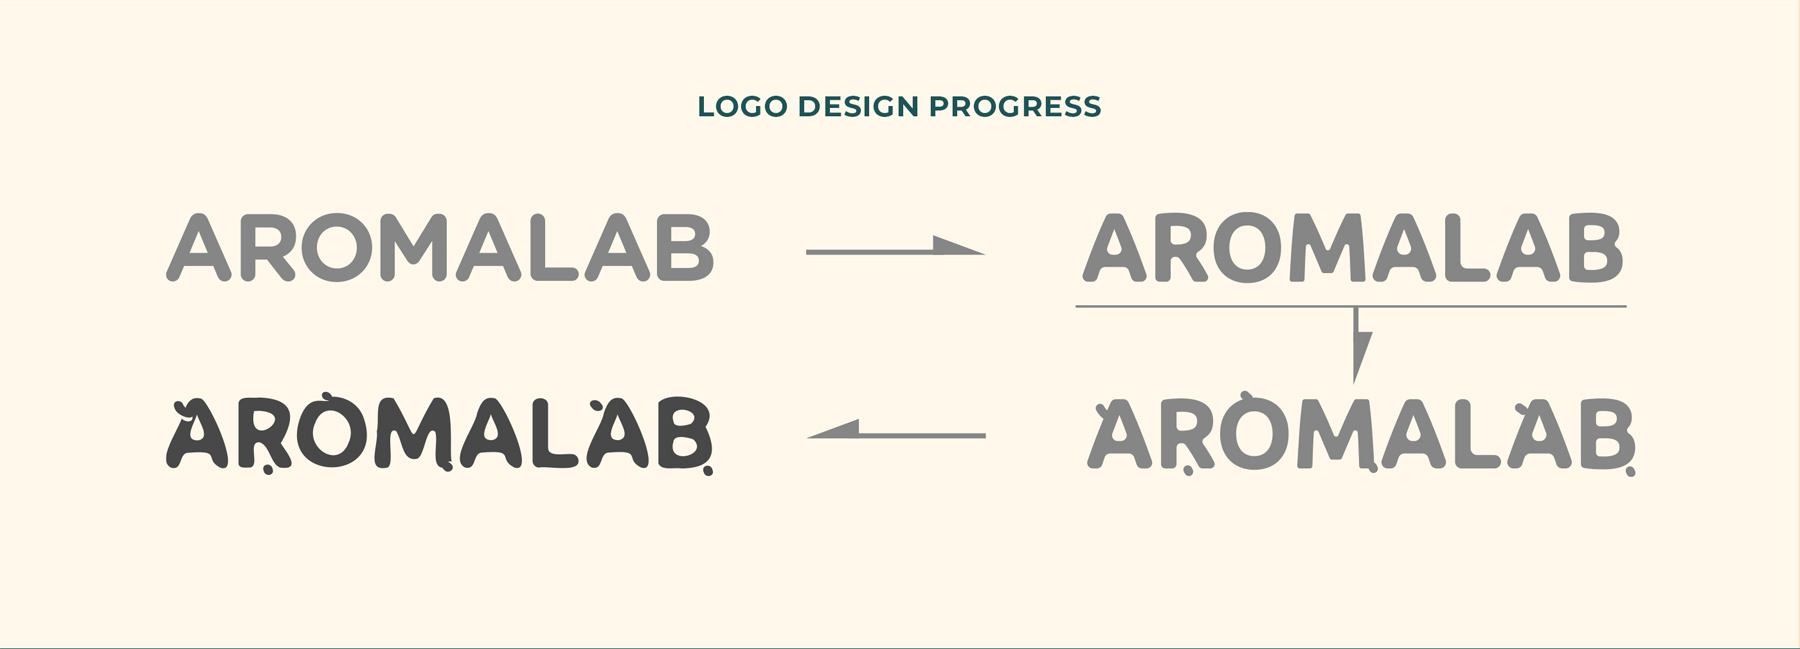 Aromalab Logo Progress